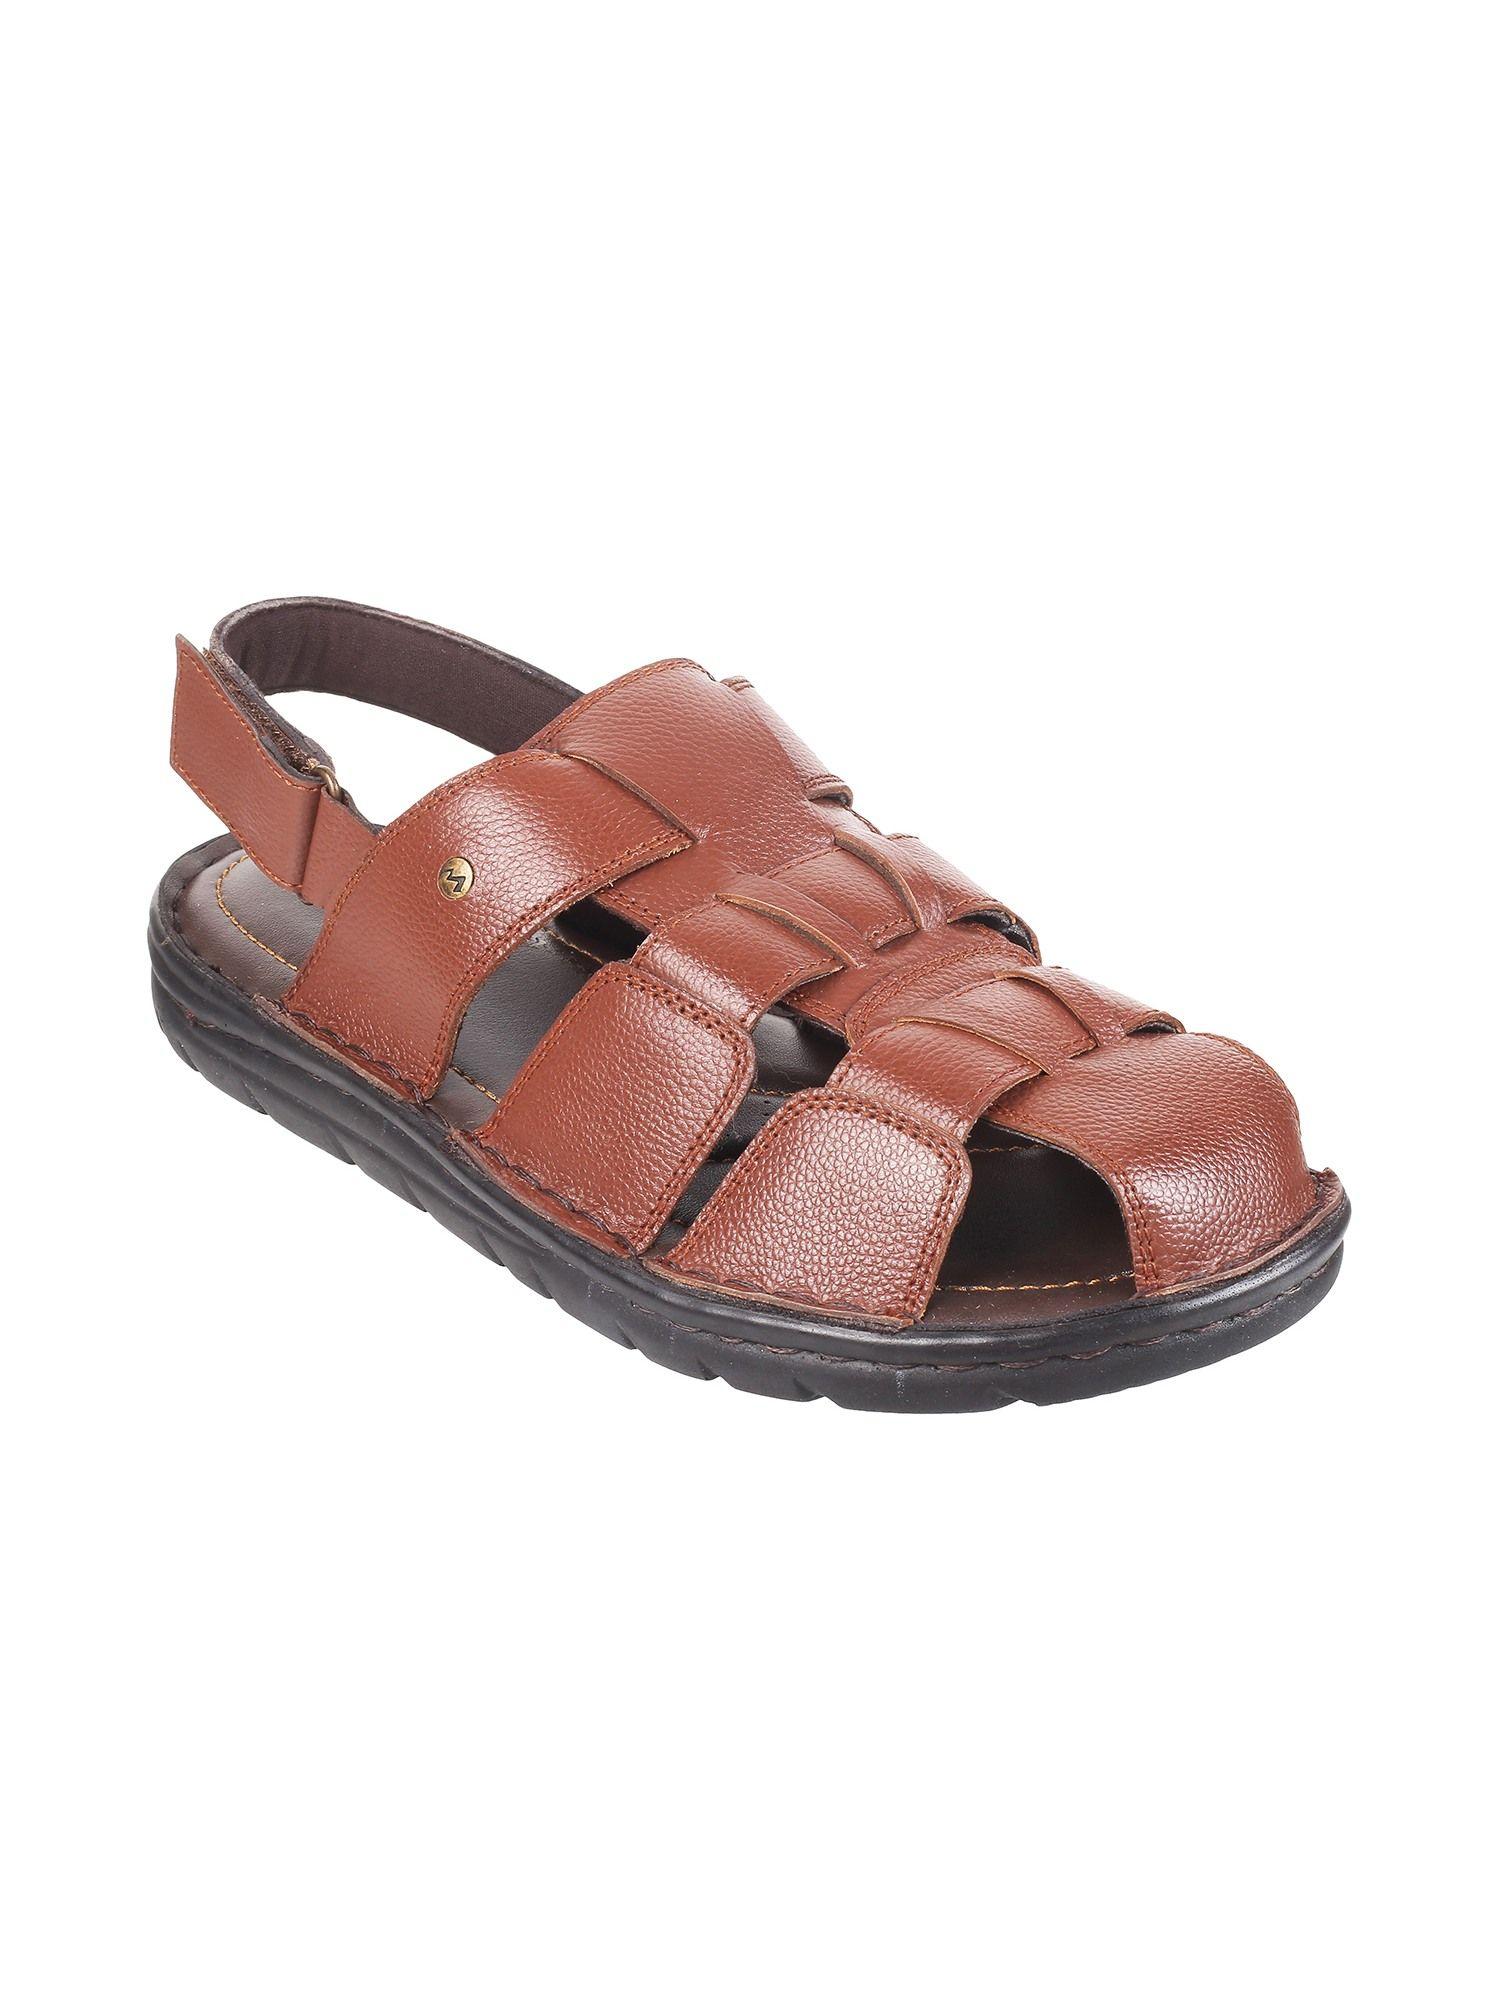 Mens Brown Flat Casual SandalsMetro Men Brown Leather Sandals